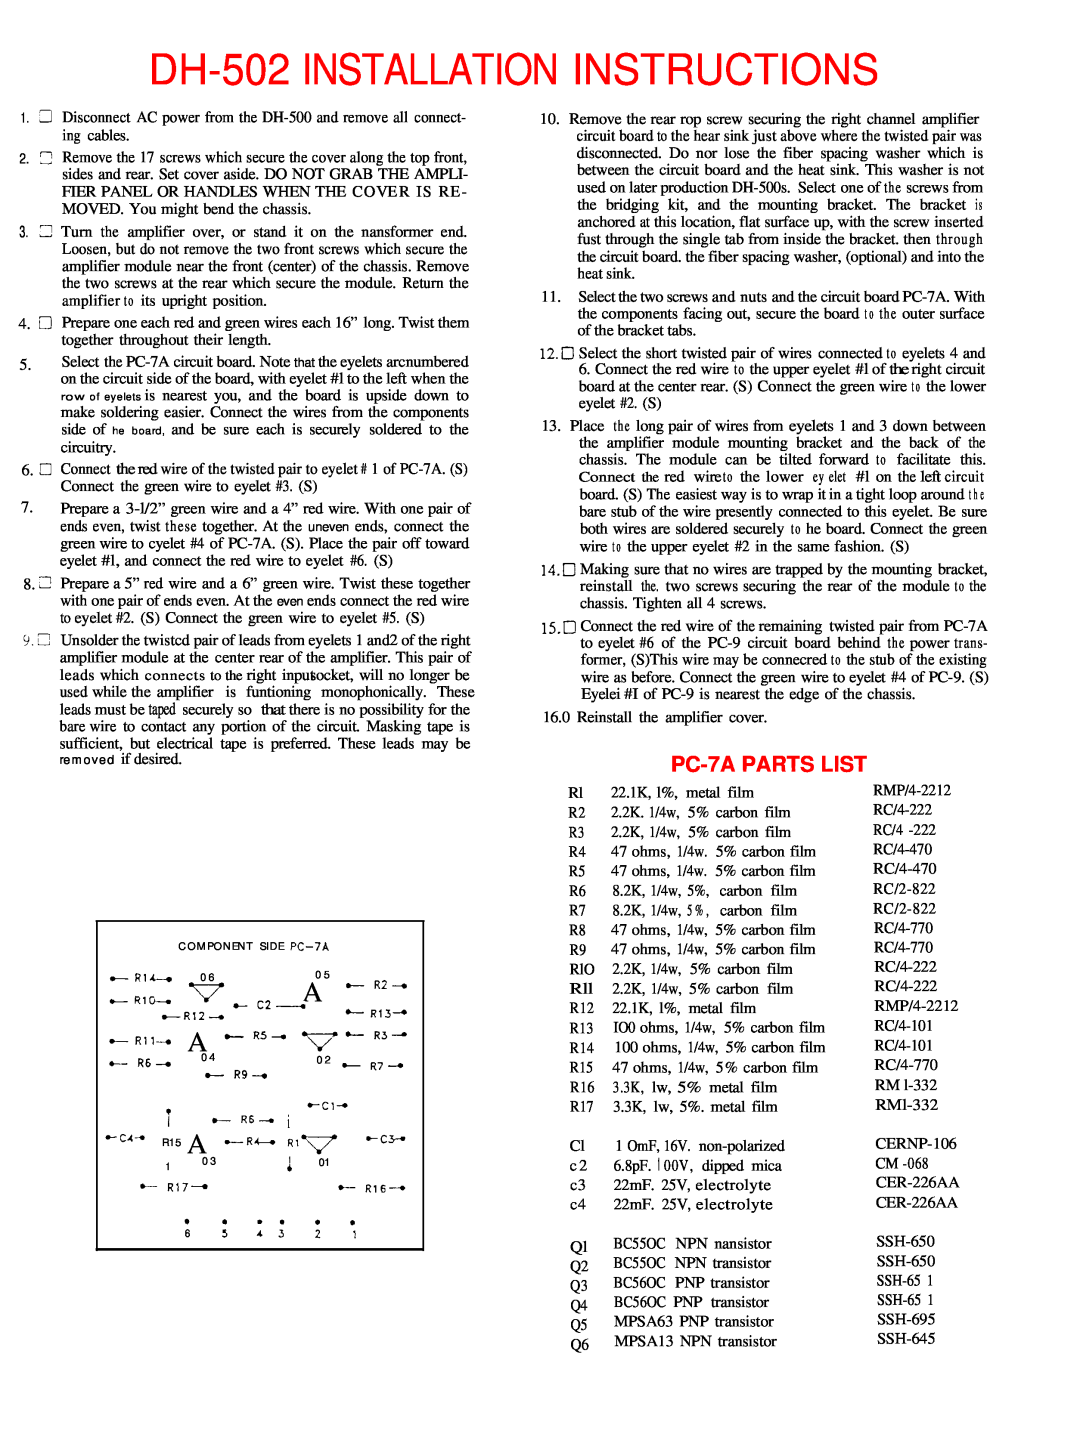 Hafler DH-500 manual PC-7APARTS LIST, DH-502INSTALLATION INSTRUCTIONS, D--R 